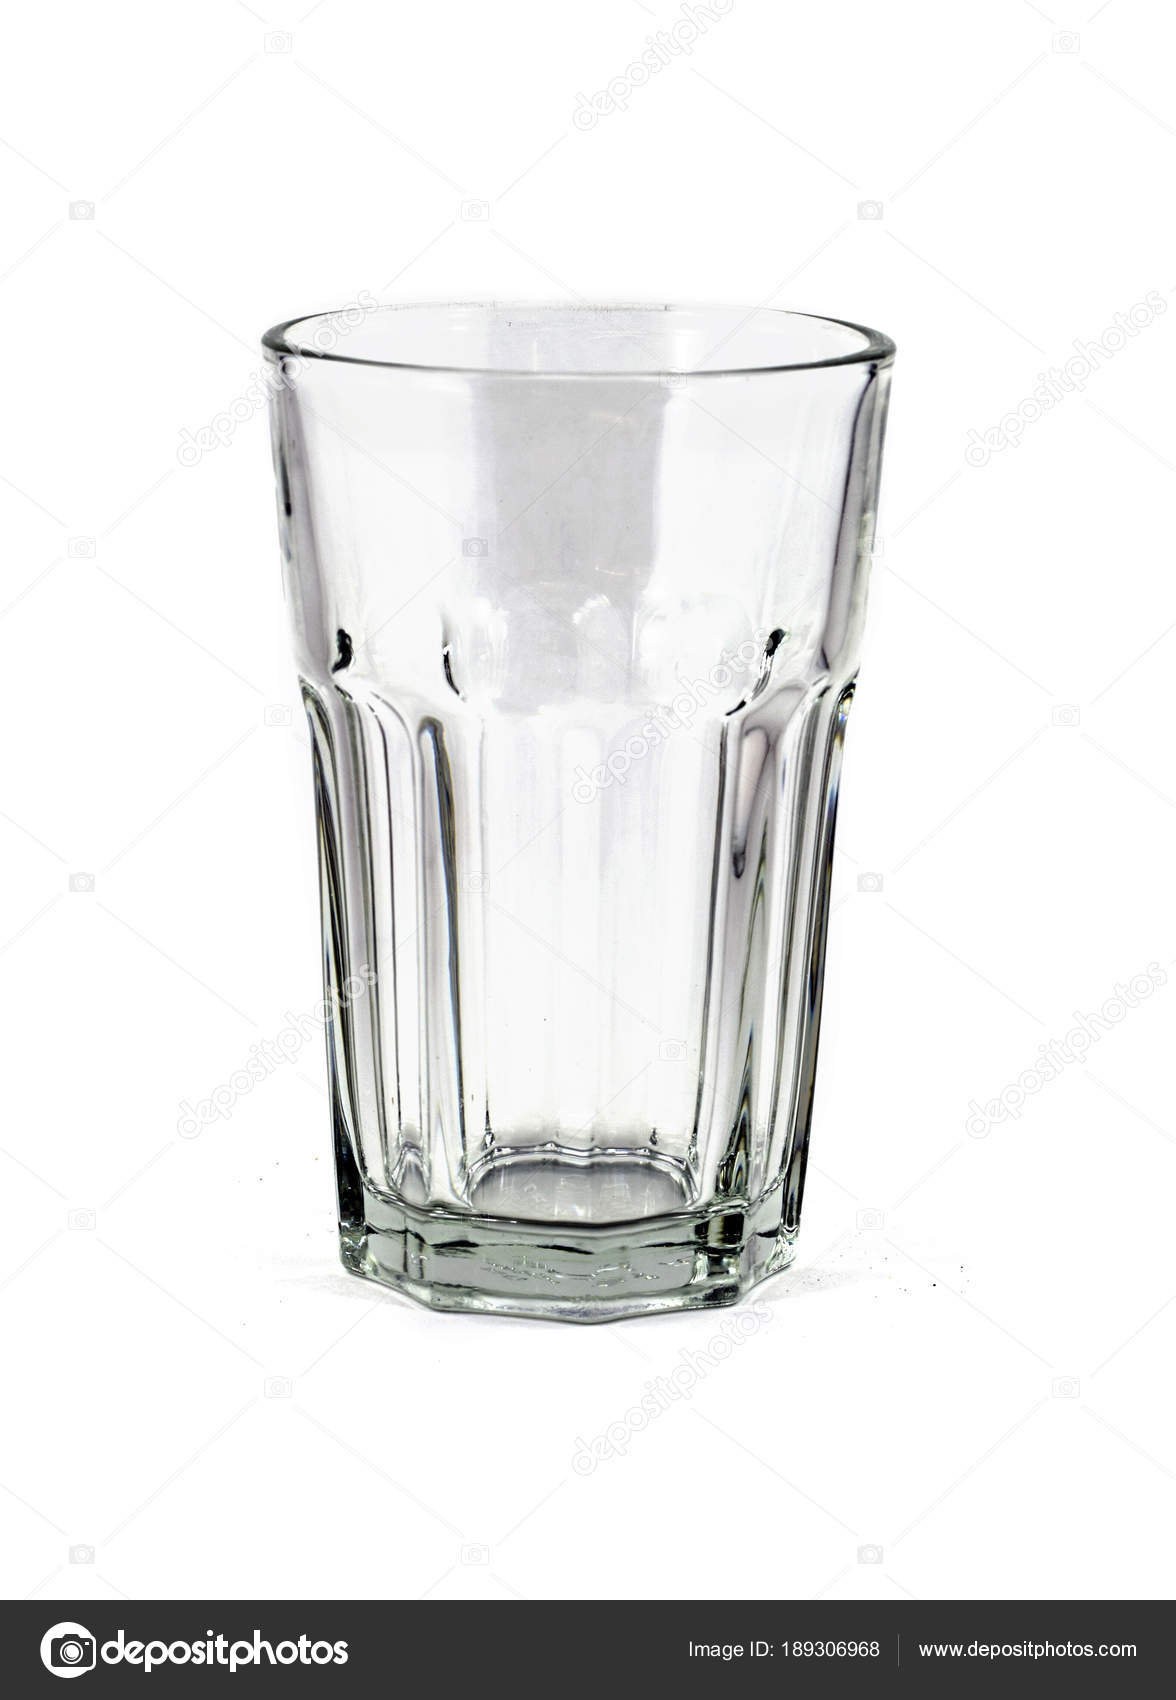 https://st3.depositphotos.com/8857146/18930/i/1600/depositphotos_189306968-stock-photo-empty-clear-glass-drinking-cup.jpg